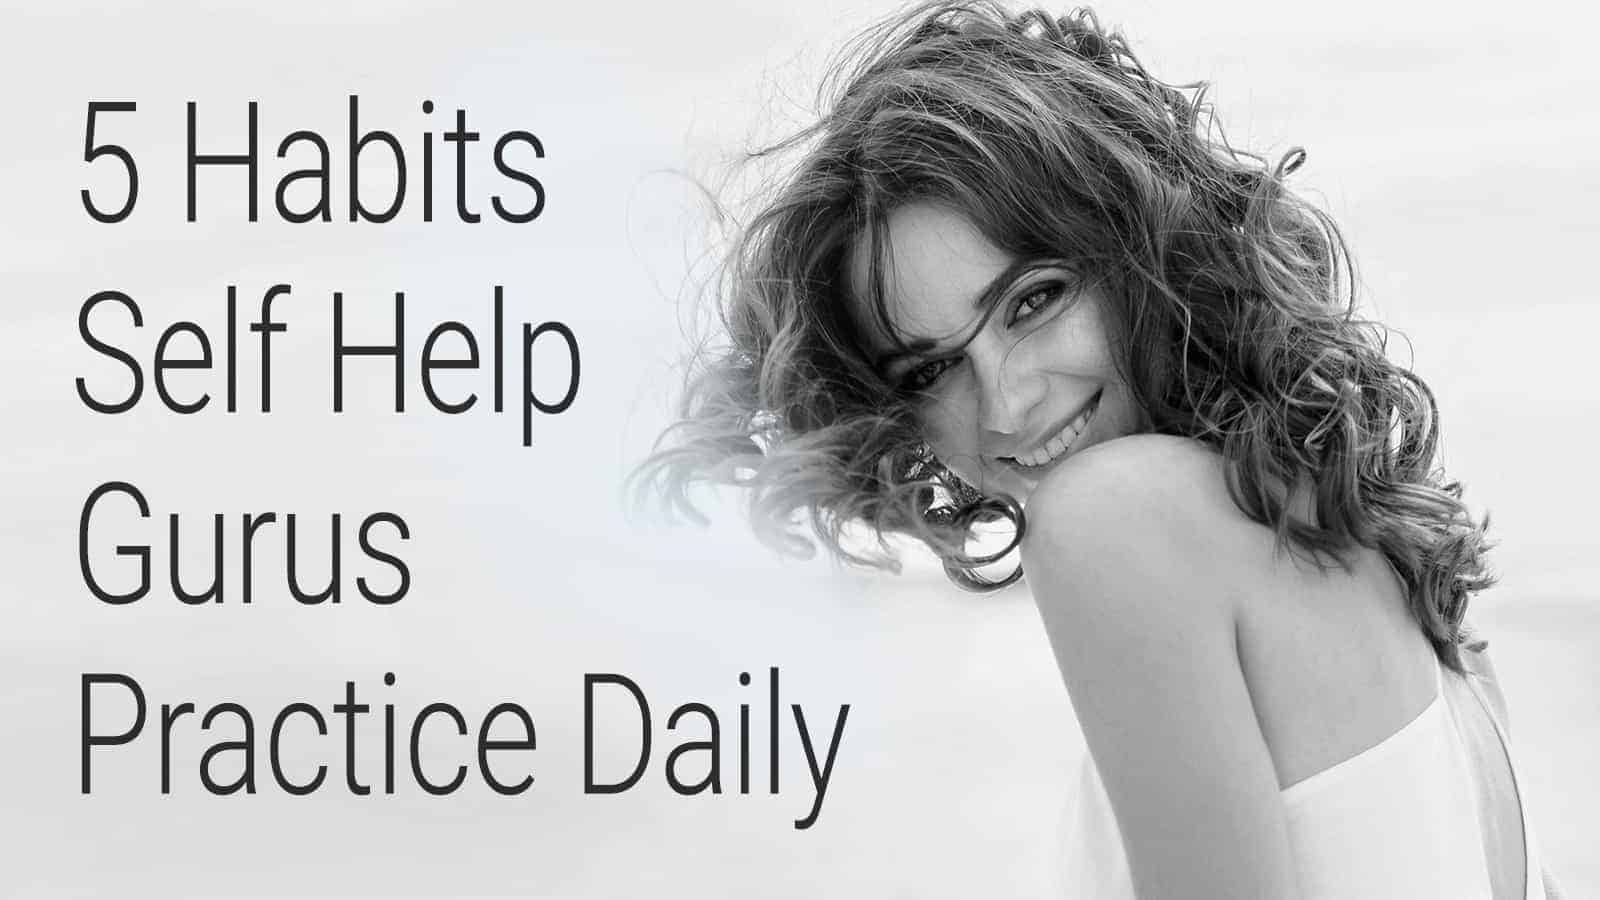 5 Habits Self Help Gurus Practice Daily